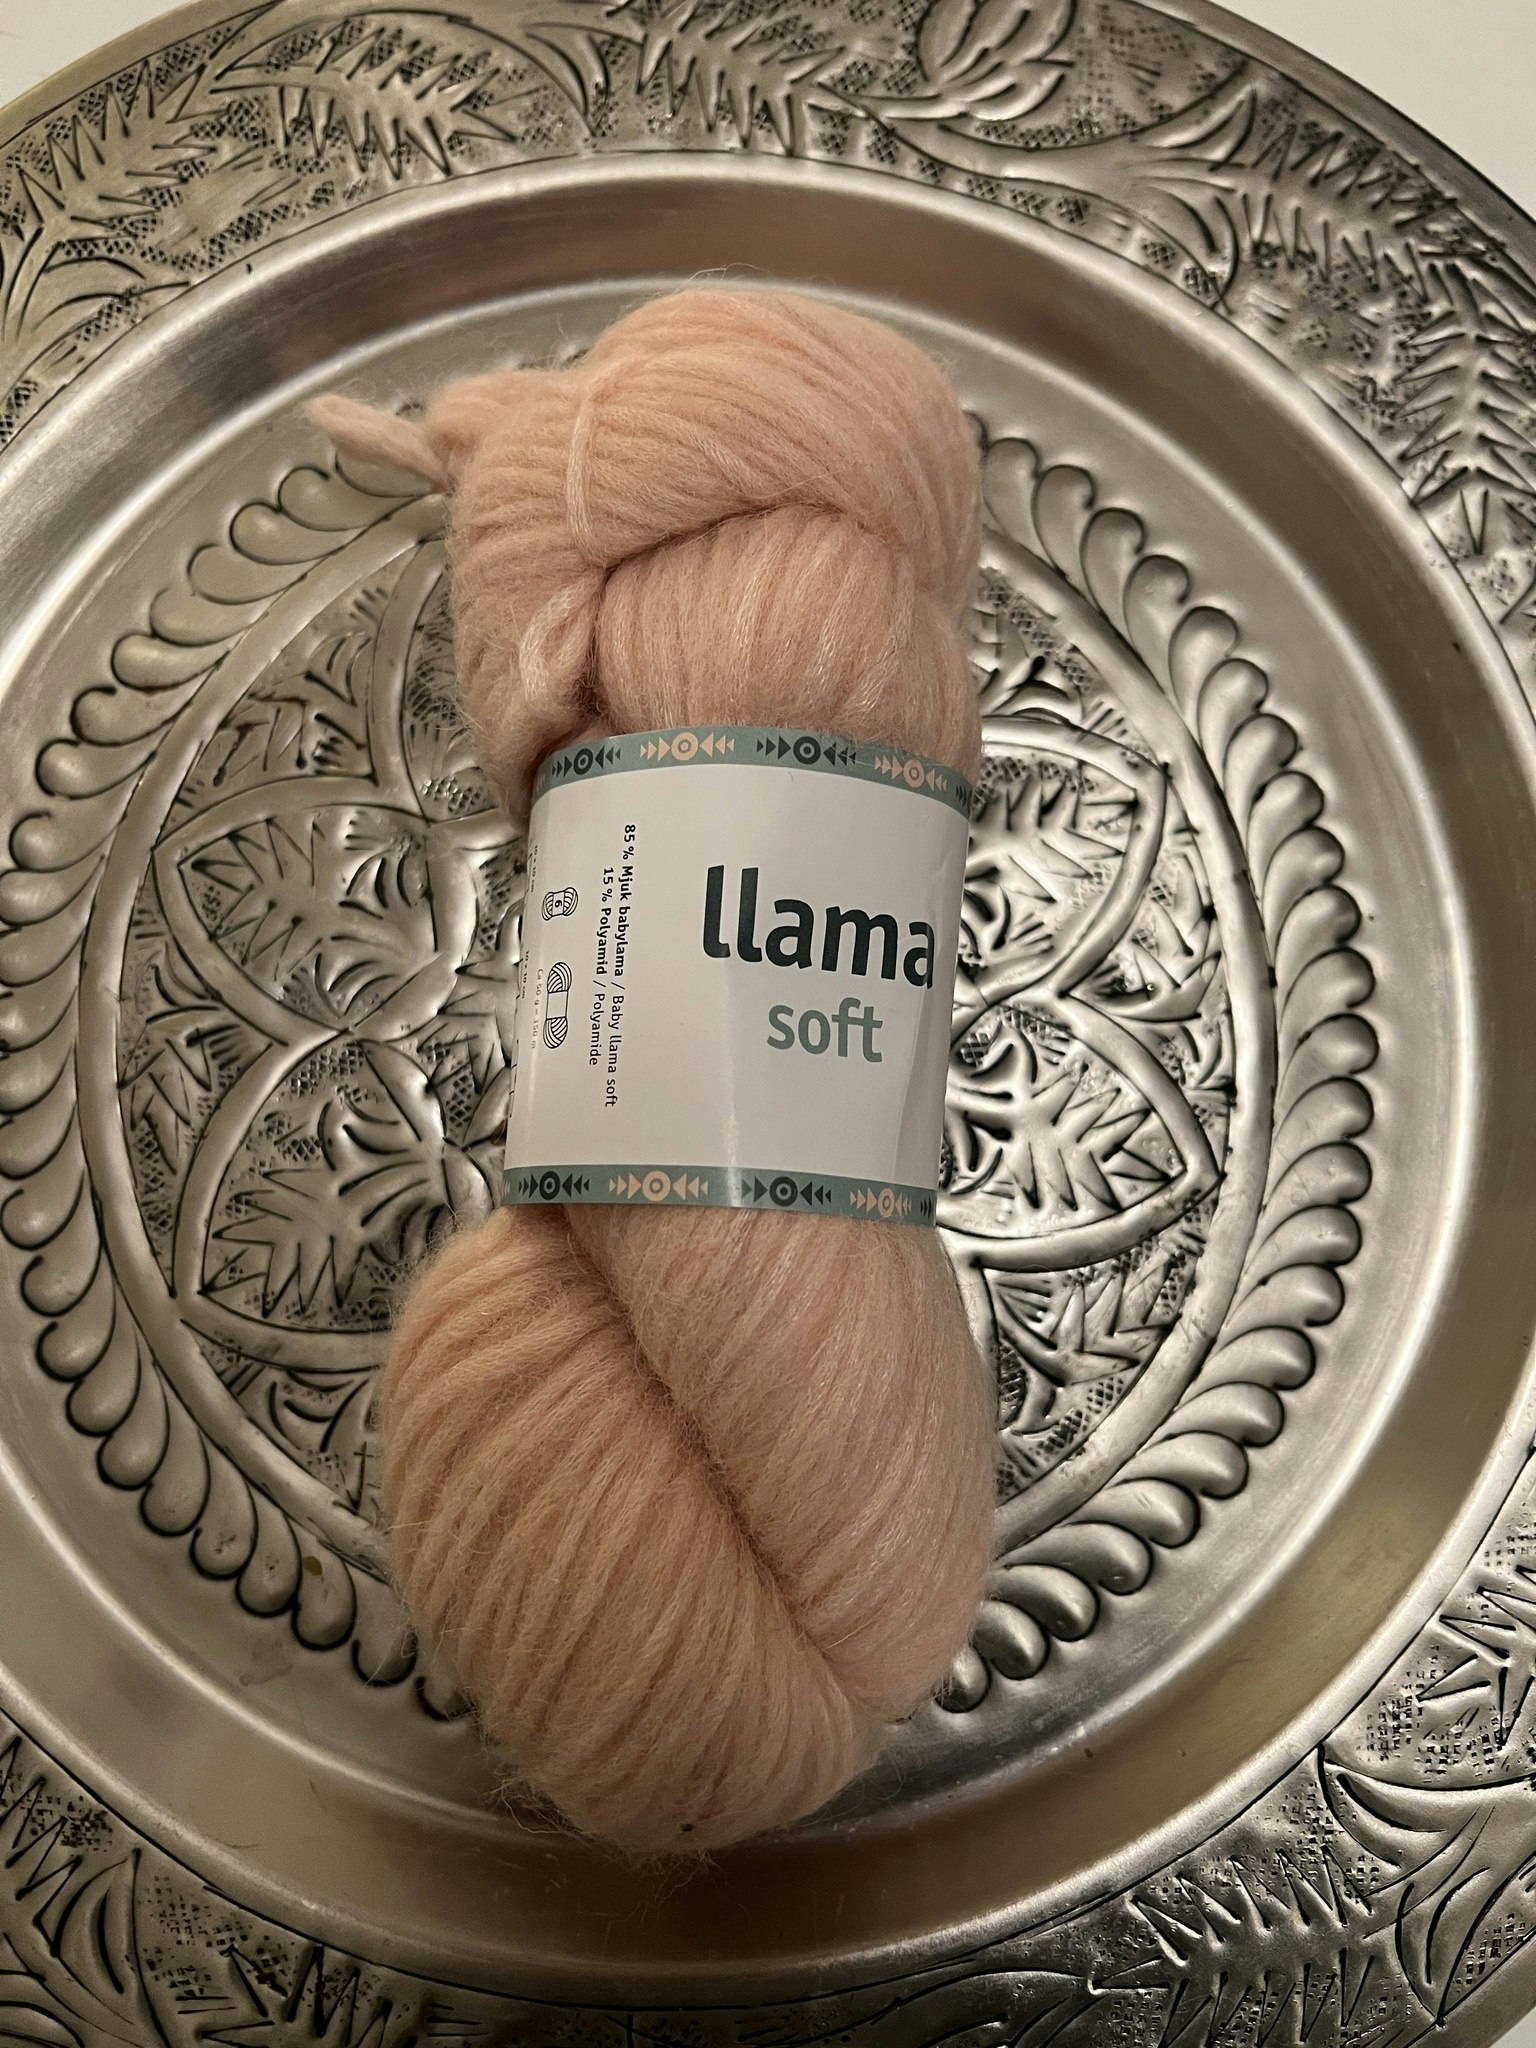 Järbo llama soft